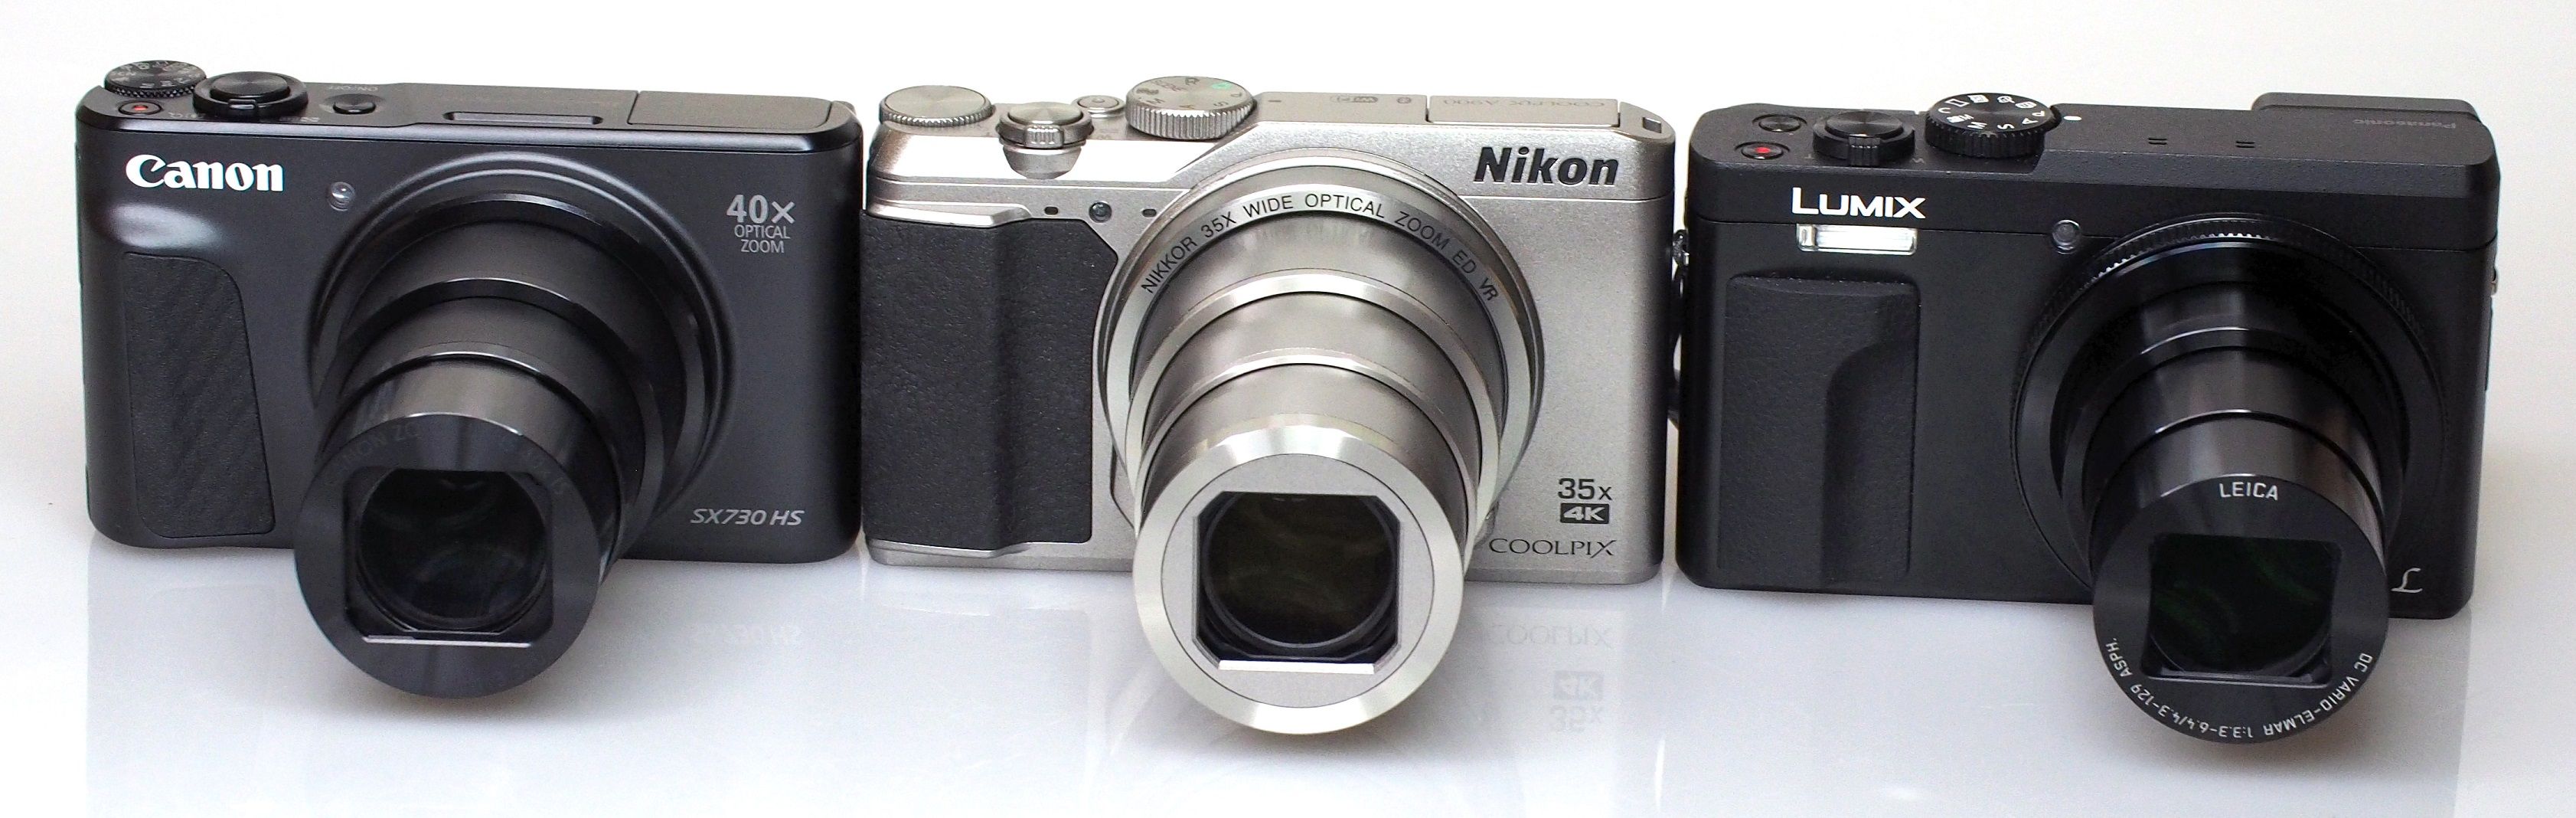 Highres Canon Powershot S X730 Hs Vs Nikon Coolpix A900 Vs Panasonic Lumix T Z90 2 1496652394